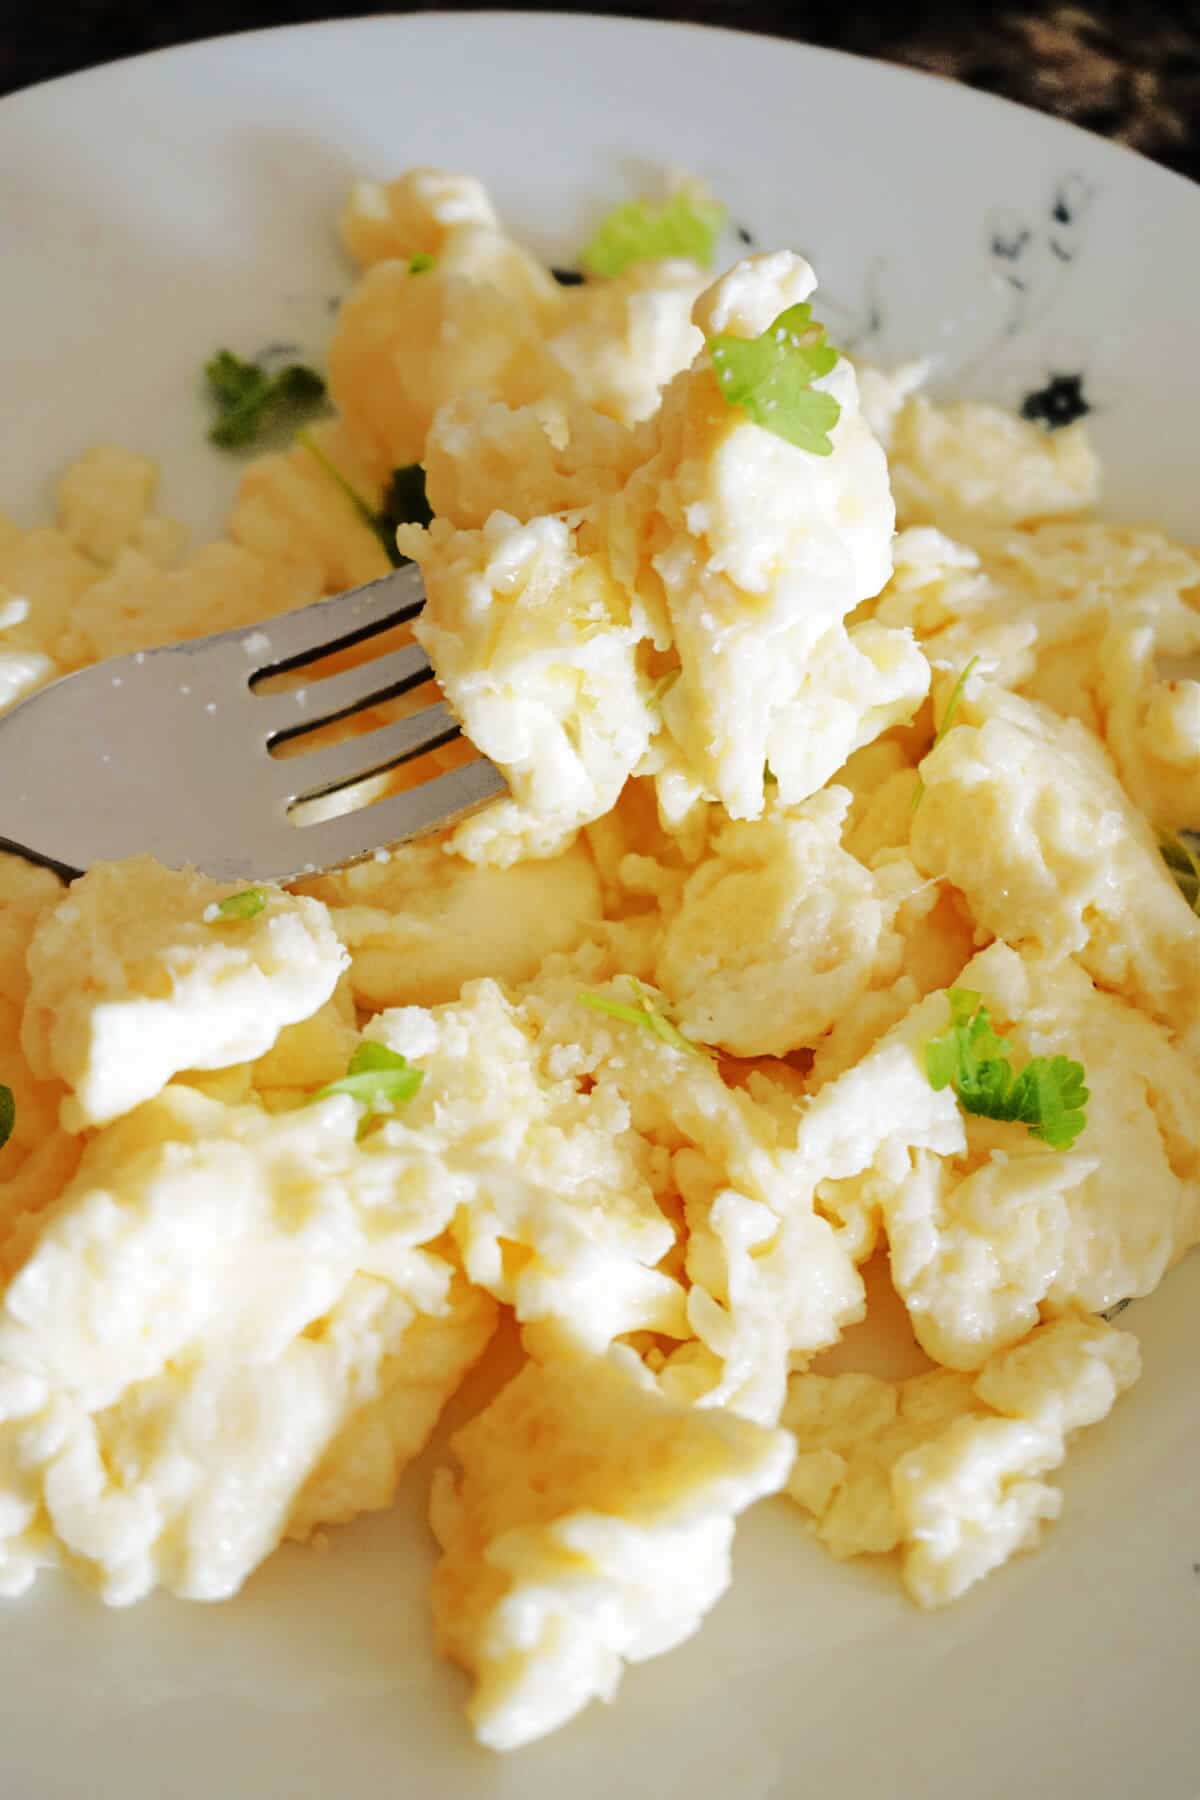 Close-up shot of scrambled eggs and a fork